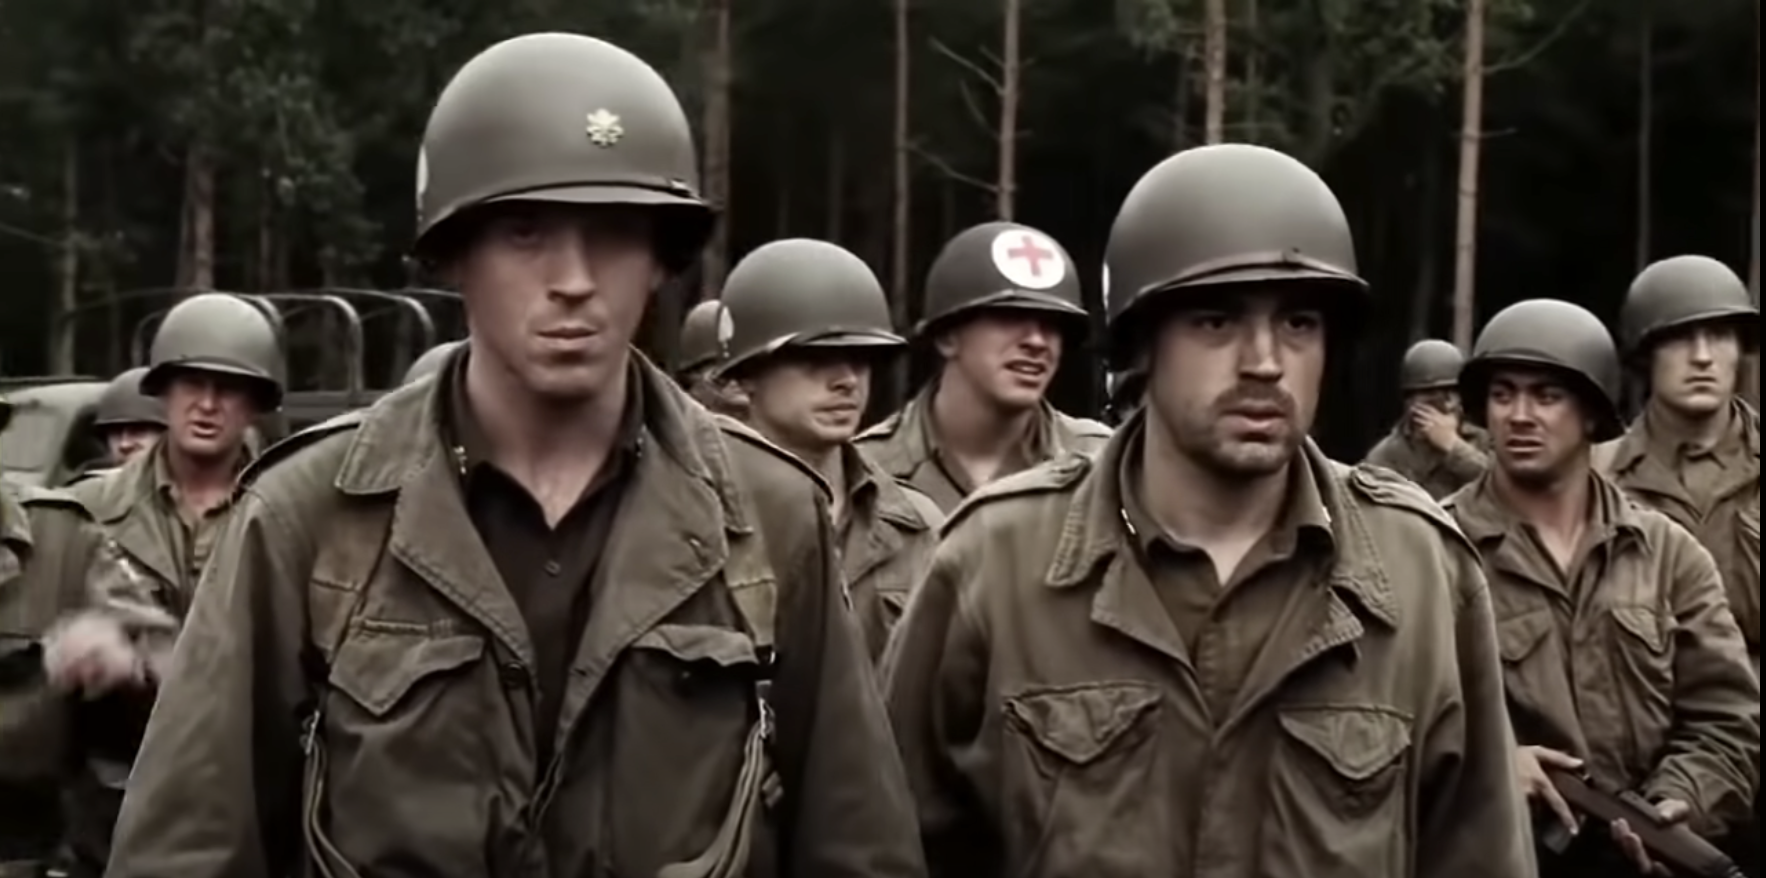 Men in military uniform standing in rows